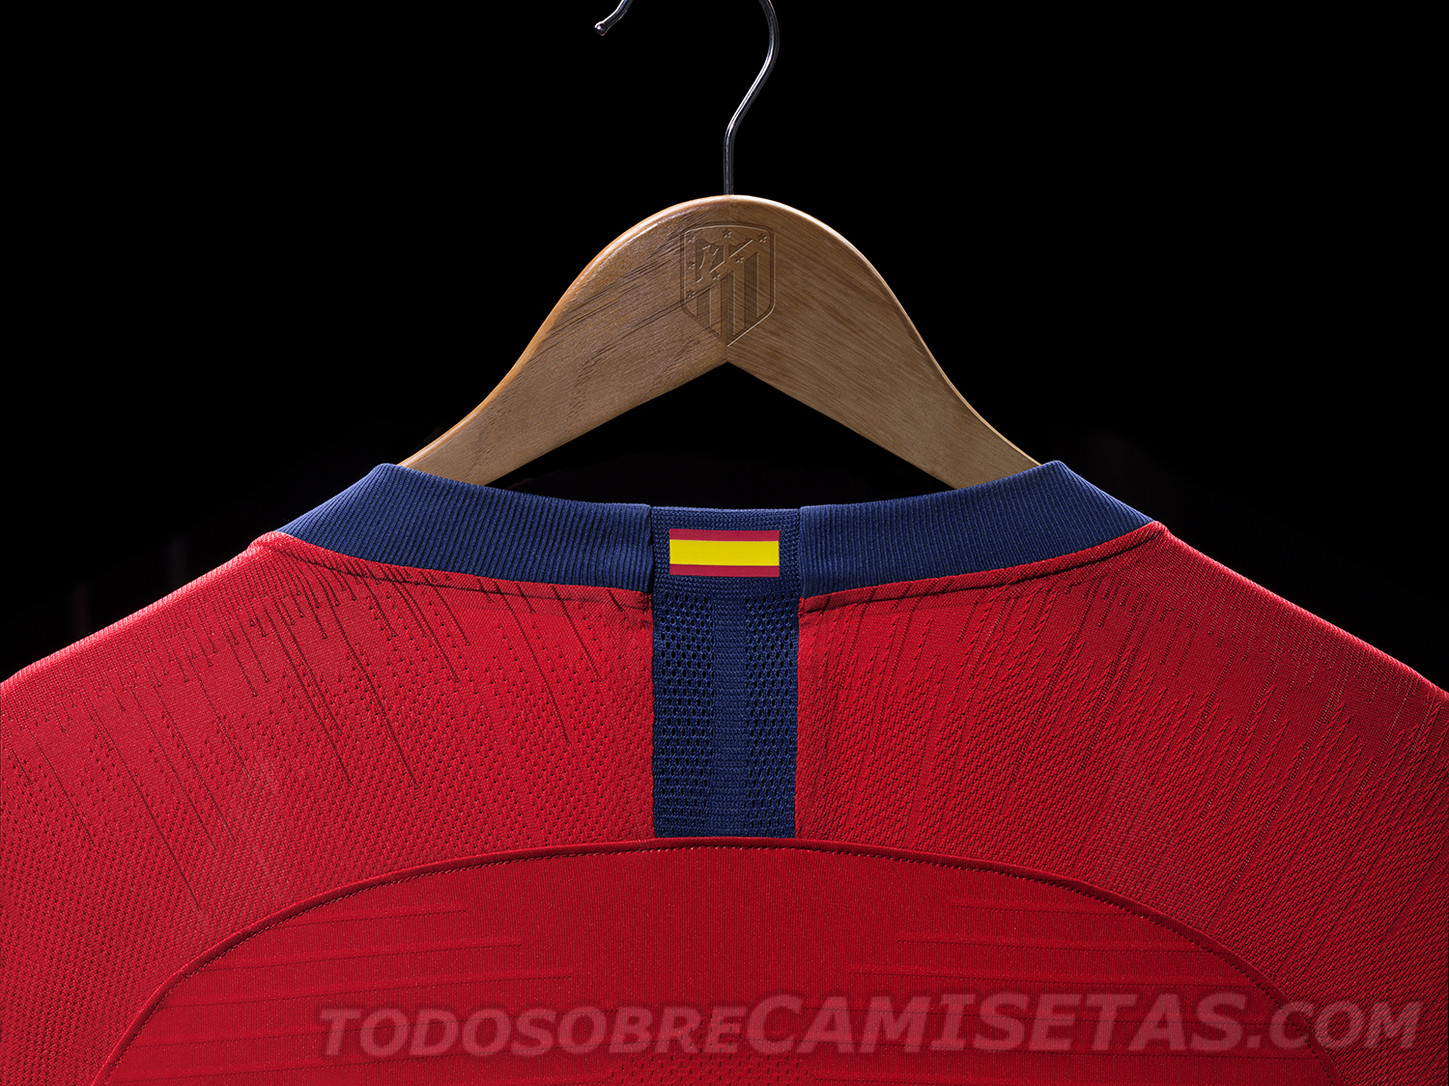 Camiseta Nike de Atlético de Madrid 2018-19